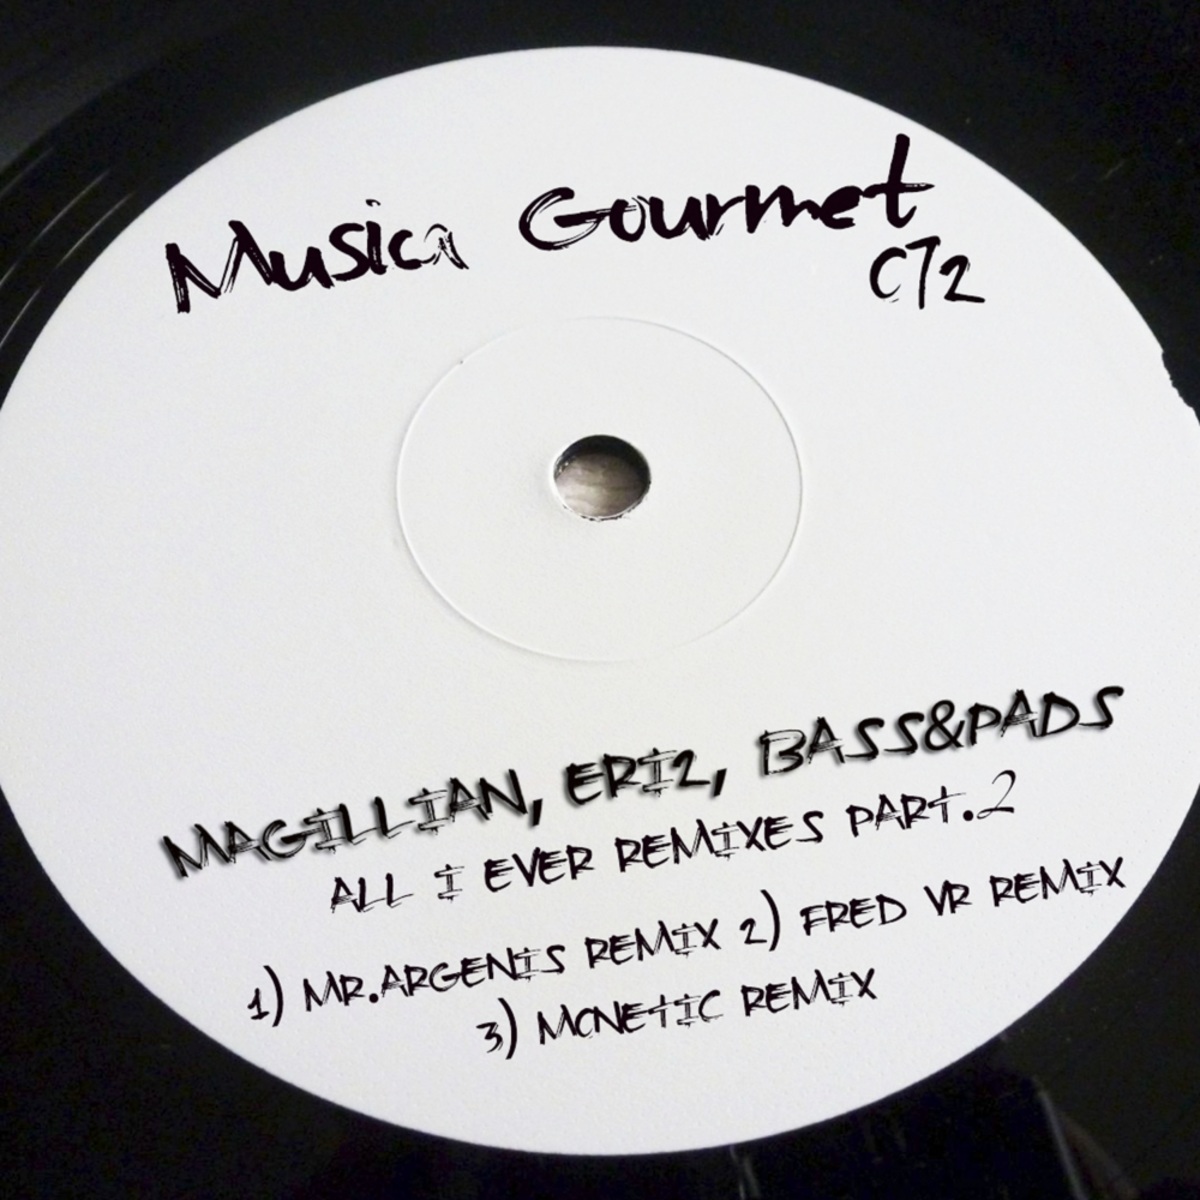 Magillian, eRi2, Bass&Pads - All I Ever Remixes, Pt. 2 / Musica Gourmet